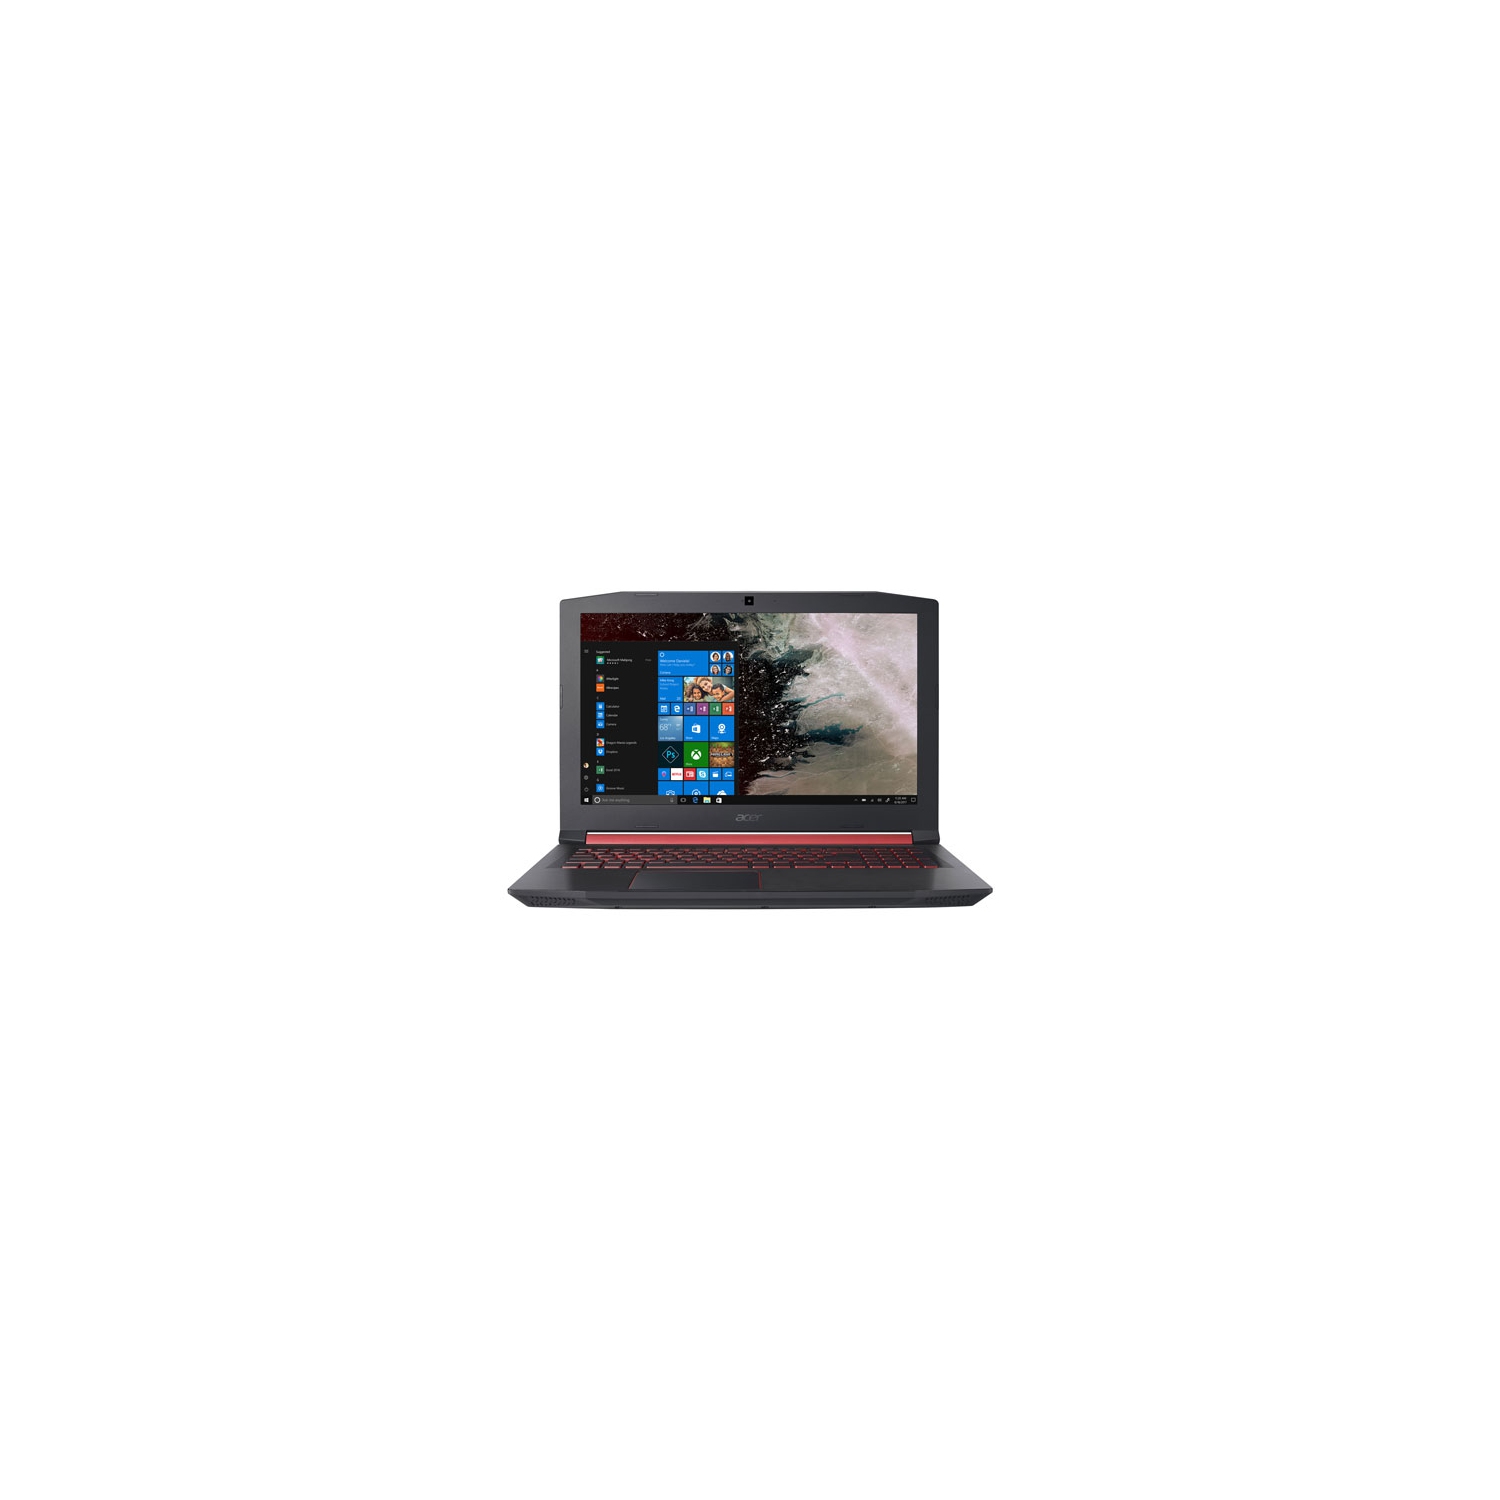 Refurbished (Good) -Acer Nitro 5 15.6" Gaming Laptop -Black/Red (AMD Ryzen 5 2500U/1TB HDD/8GB RAM/AMD Radeon RX 560X)